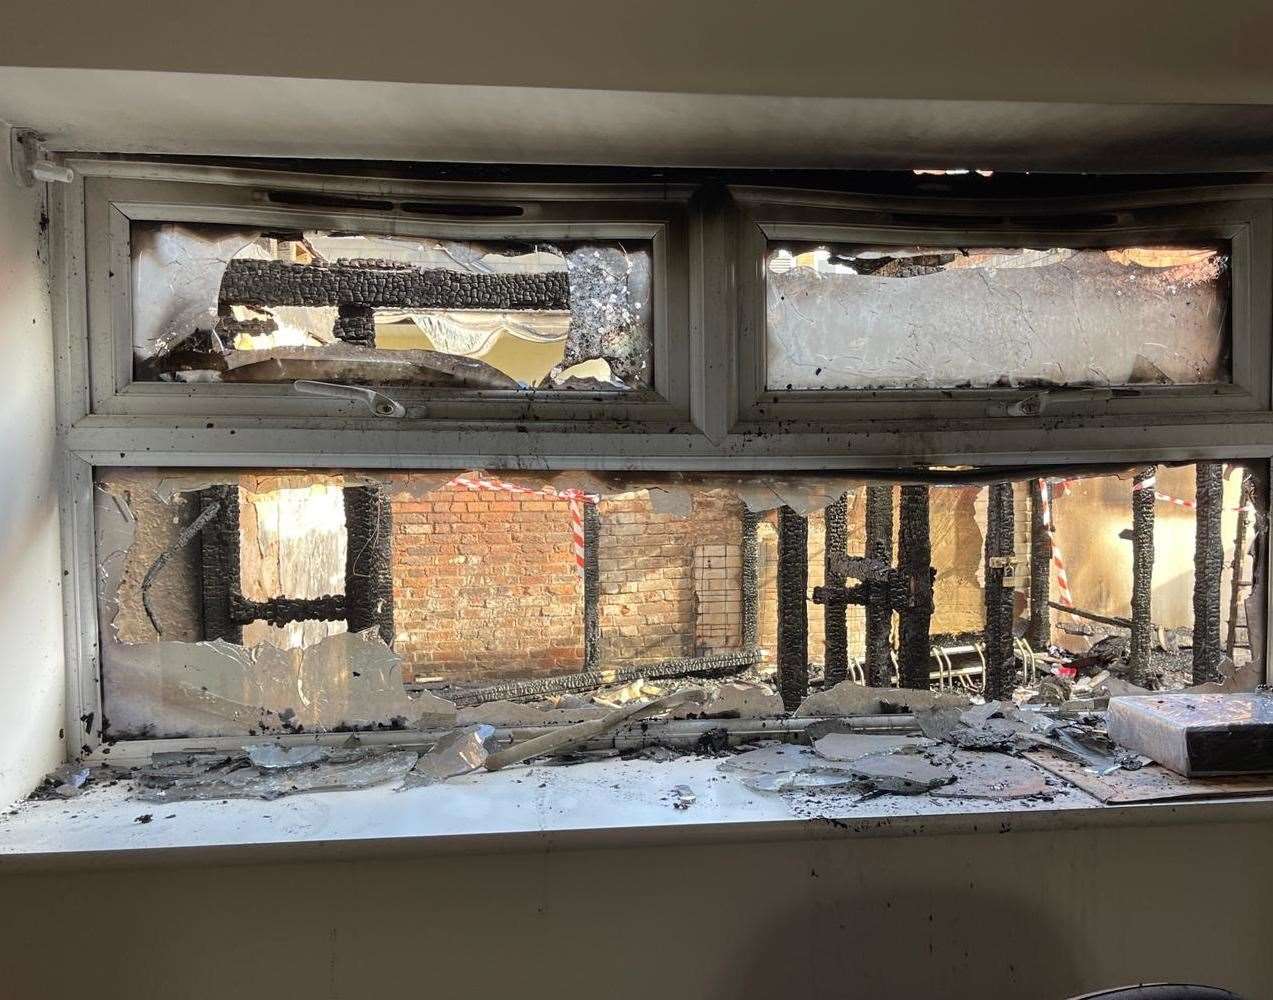 Windows were smashed. Picture: Steve Morley